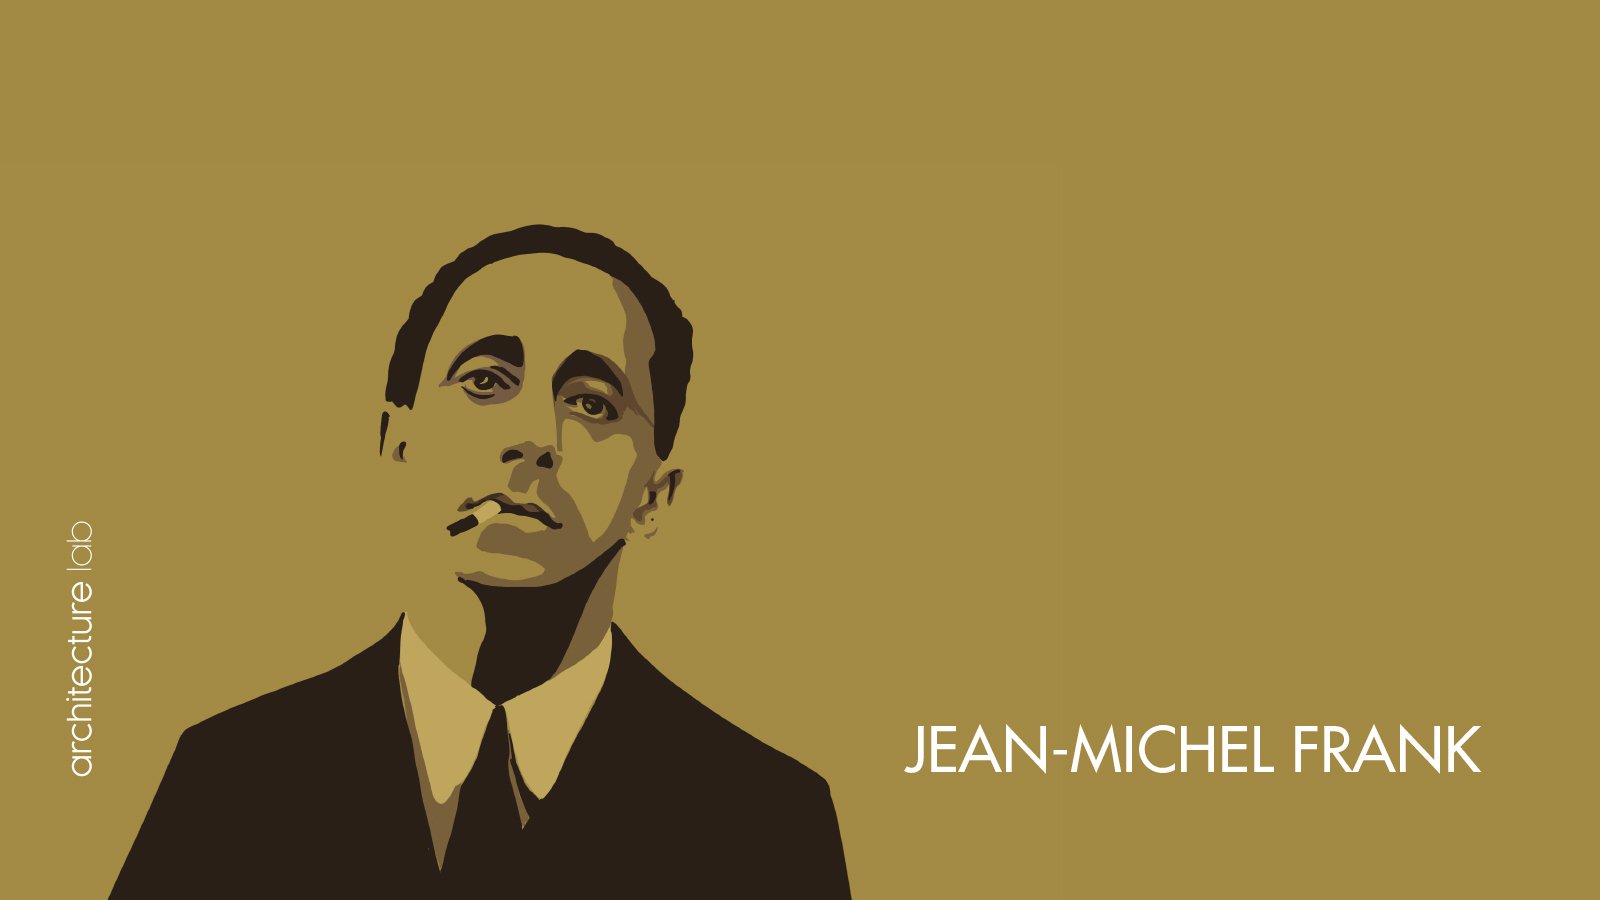 9. Jean-michel frank